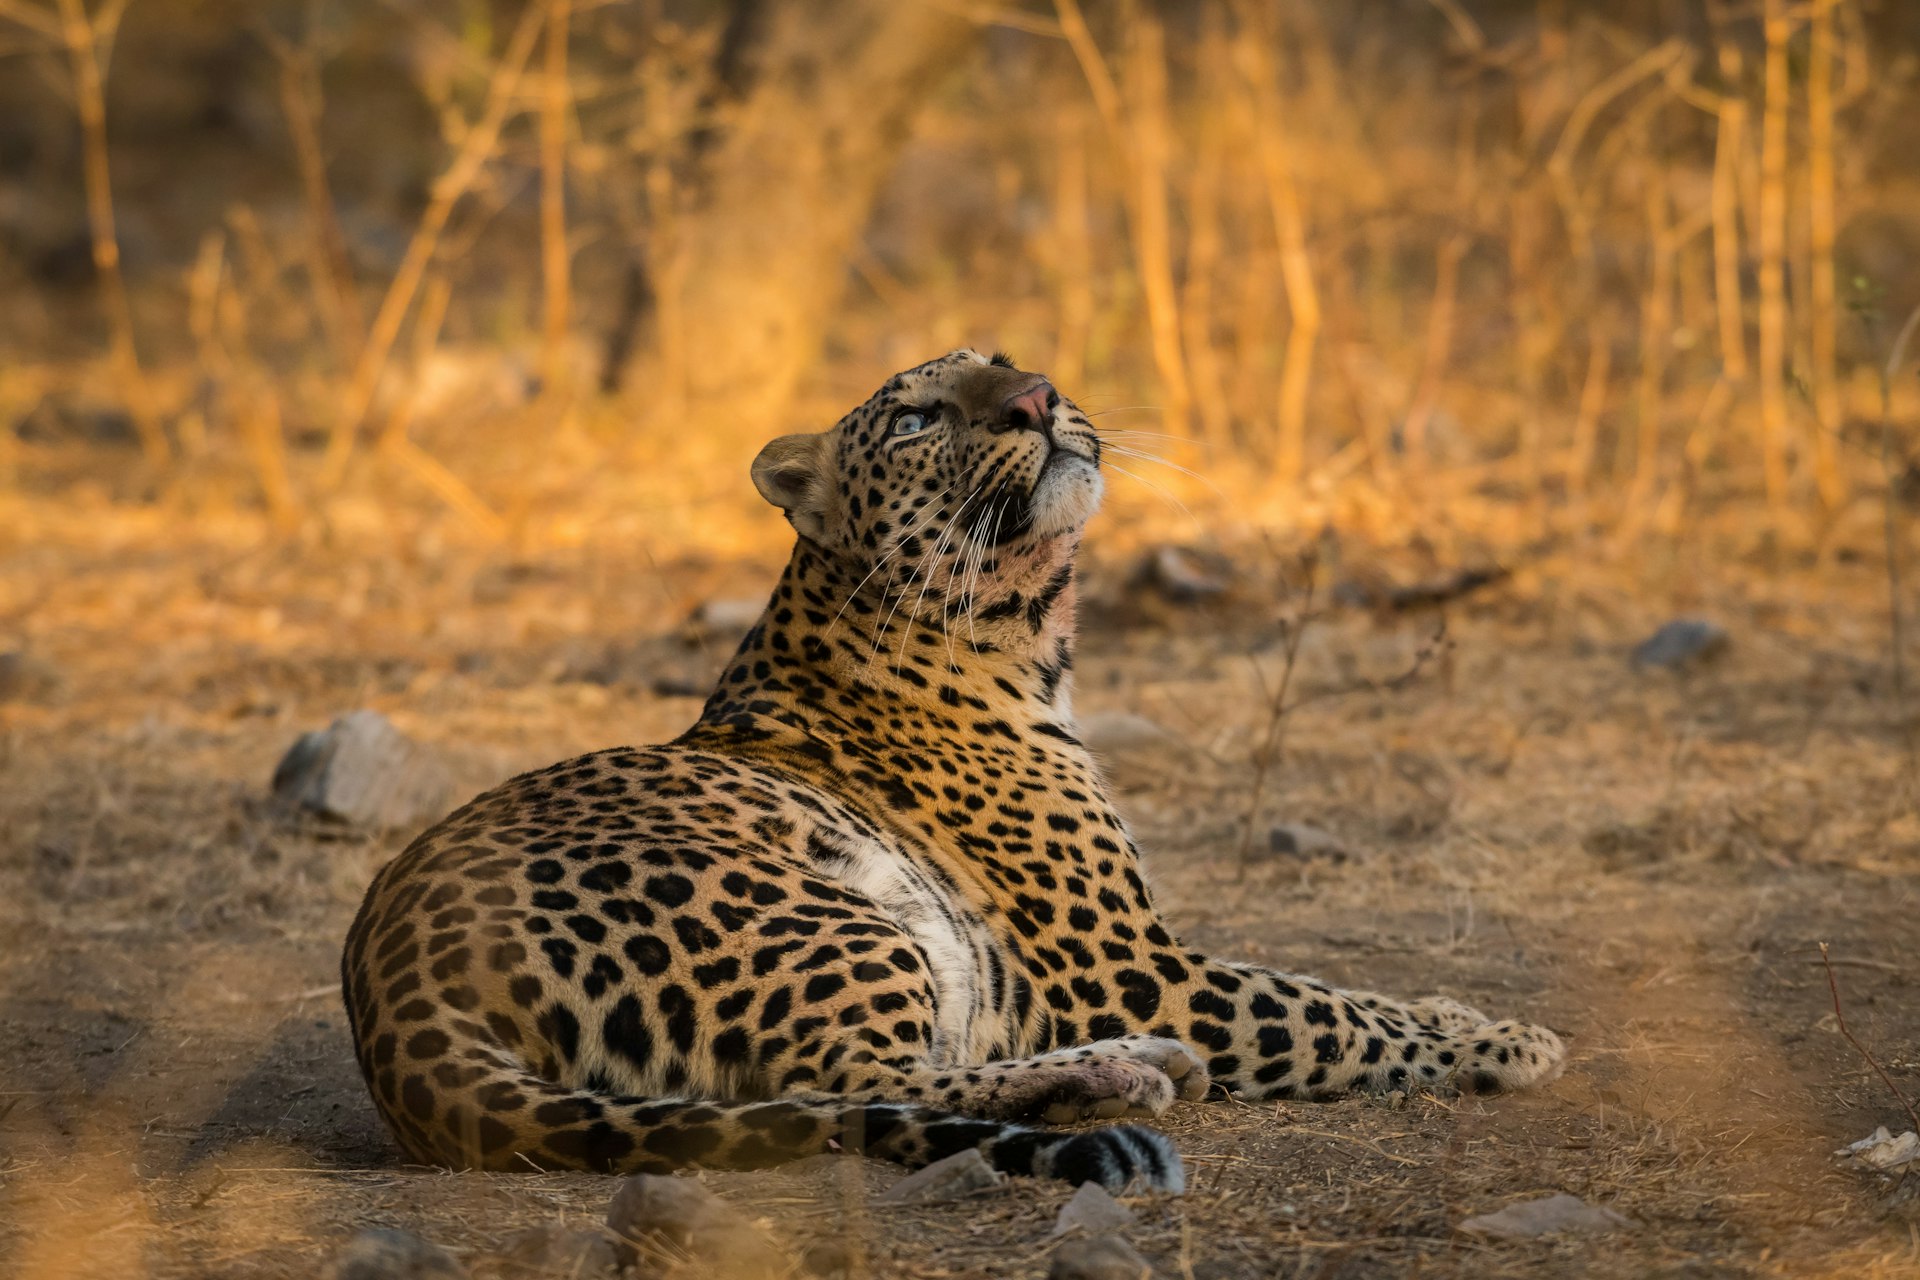 A leopard fixing its gaze on bird, Jhalana Forest Reserve, Jaipur